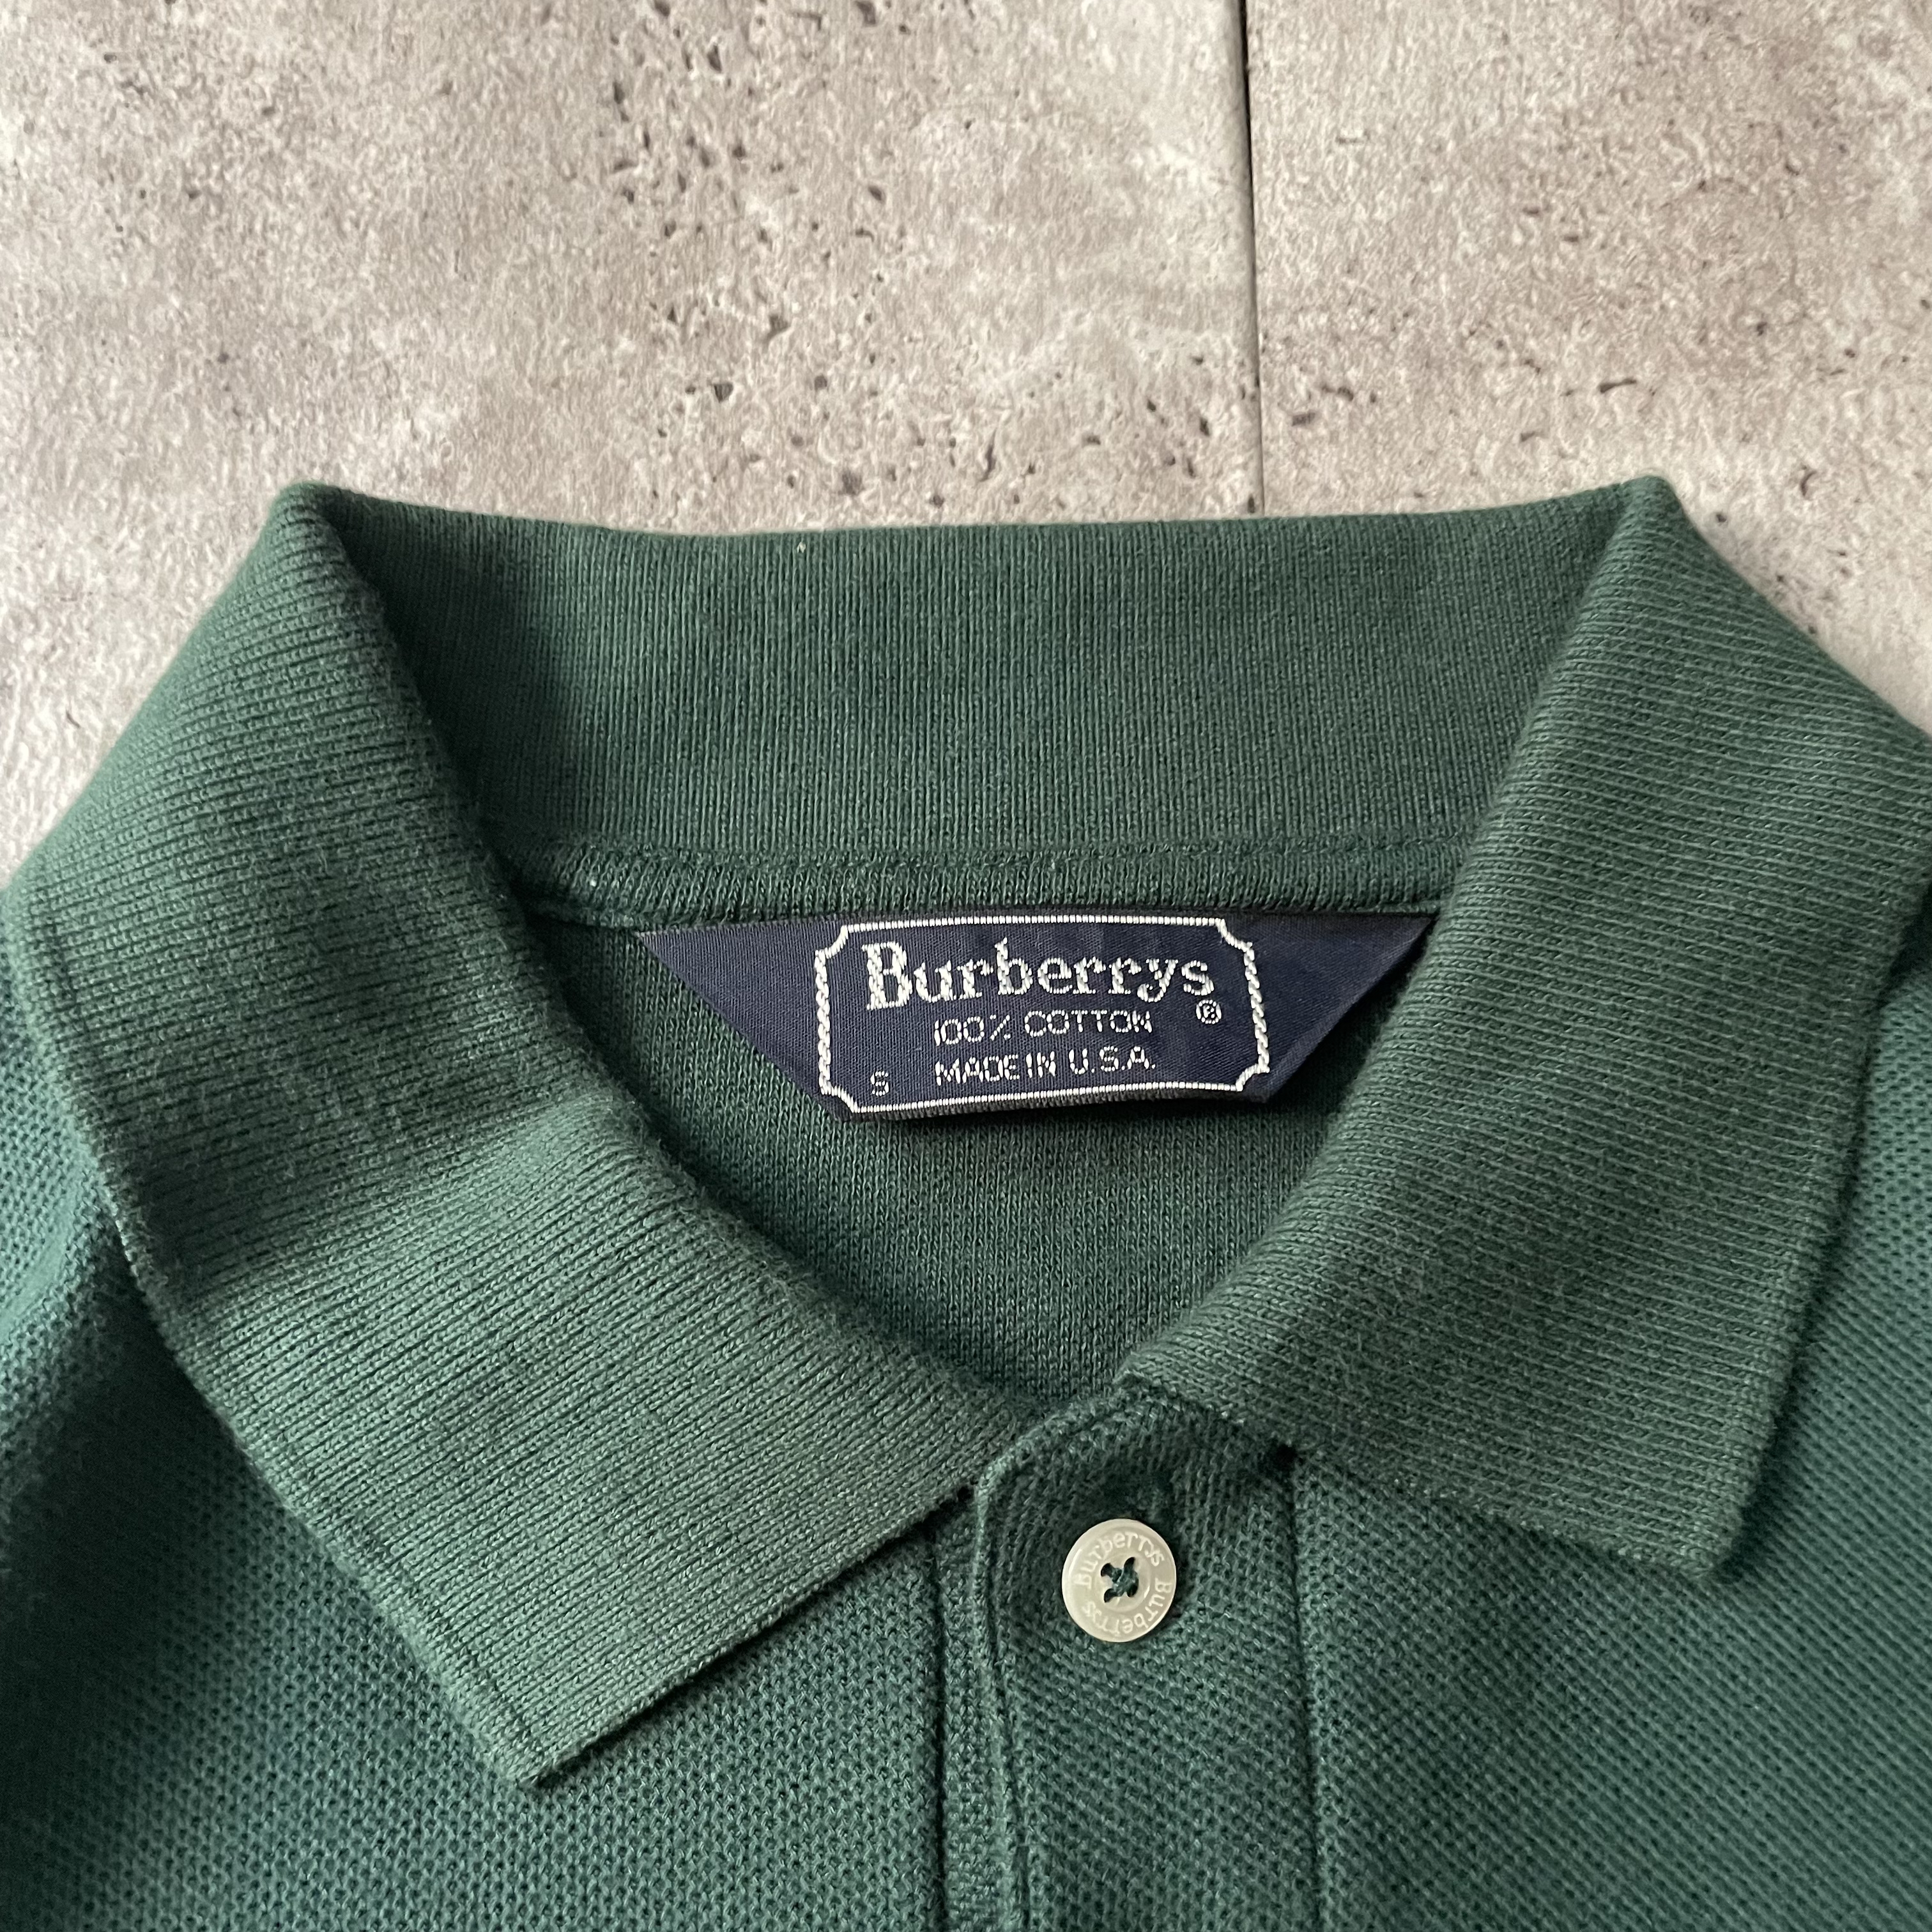 90s】Burberry バーバリー ポロシャツ 半袖 USA製 グリーン 緑 